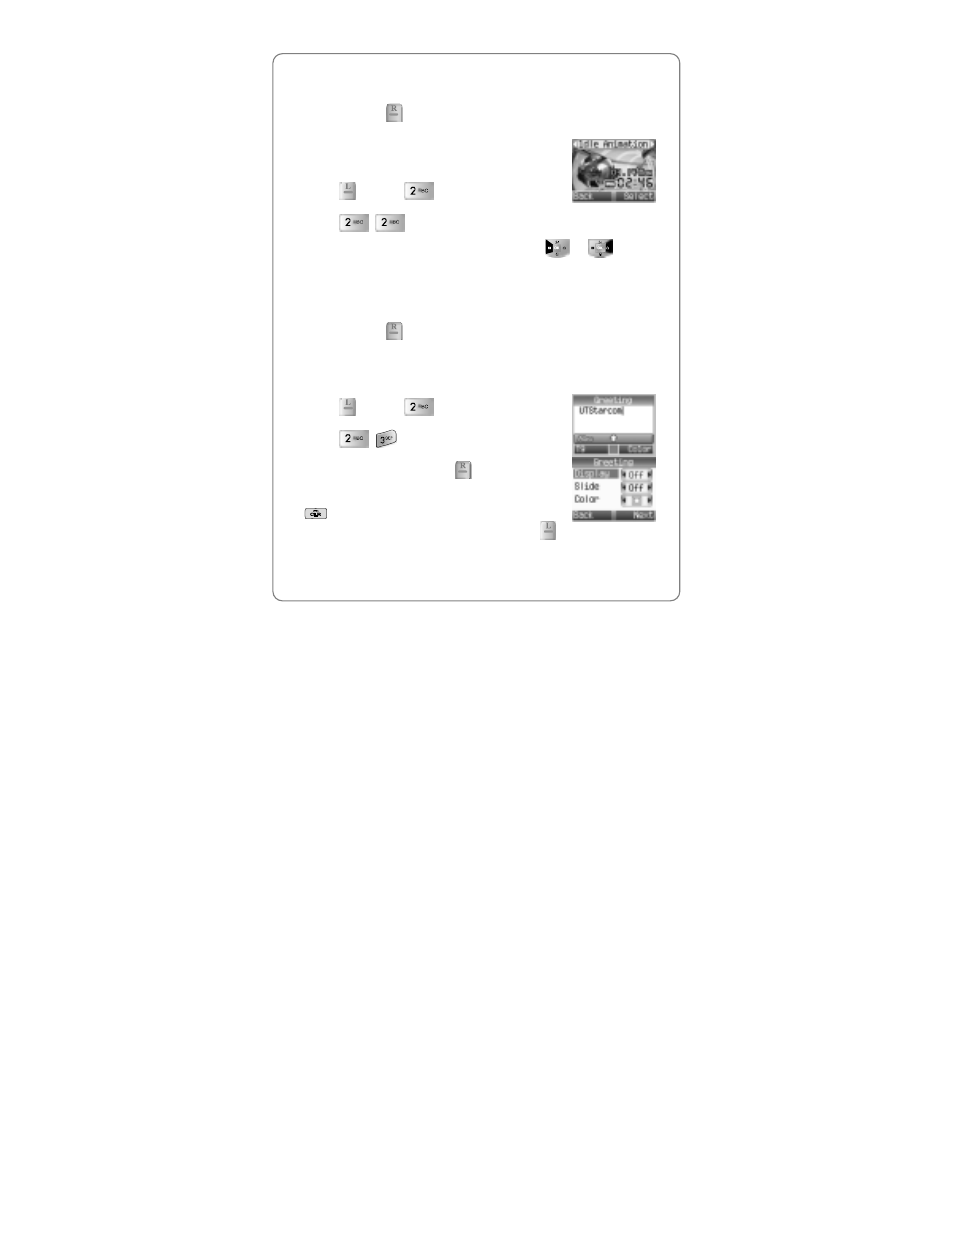 2 wallpaper, 3 greeting | UTStarcom Handset User Manual | Page 30 / 87